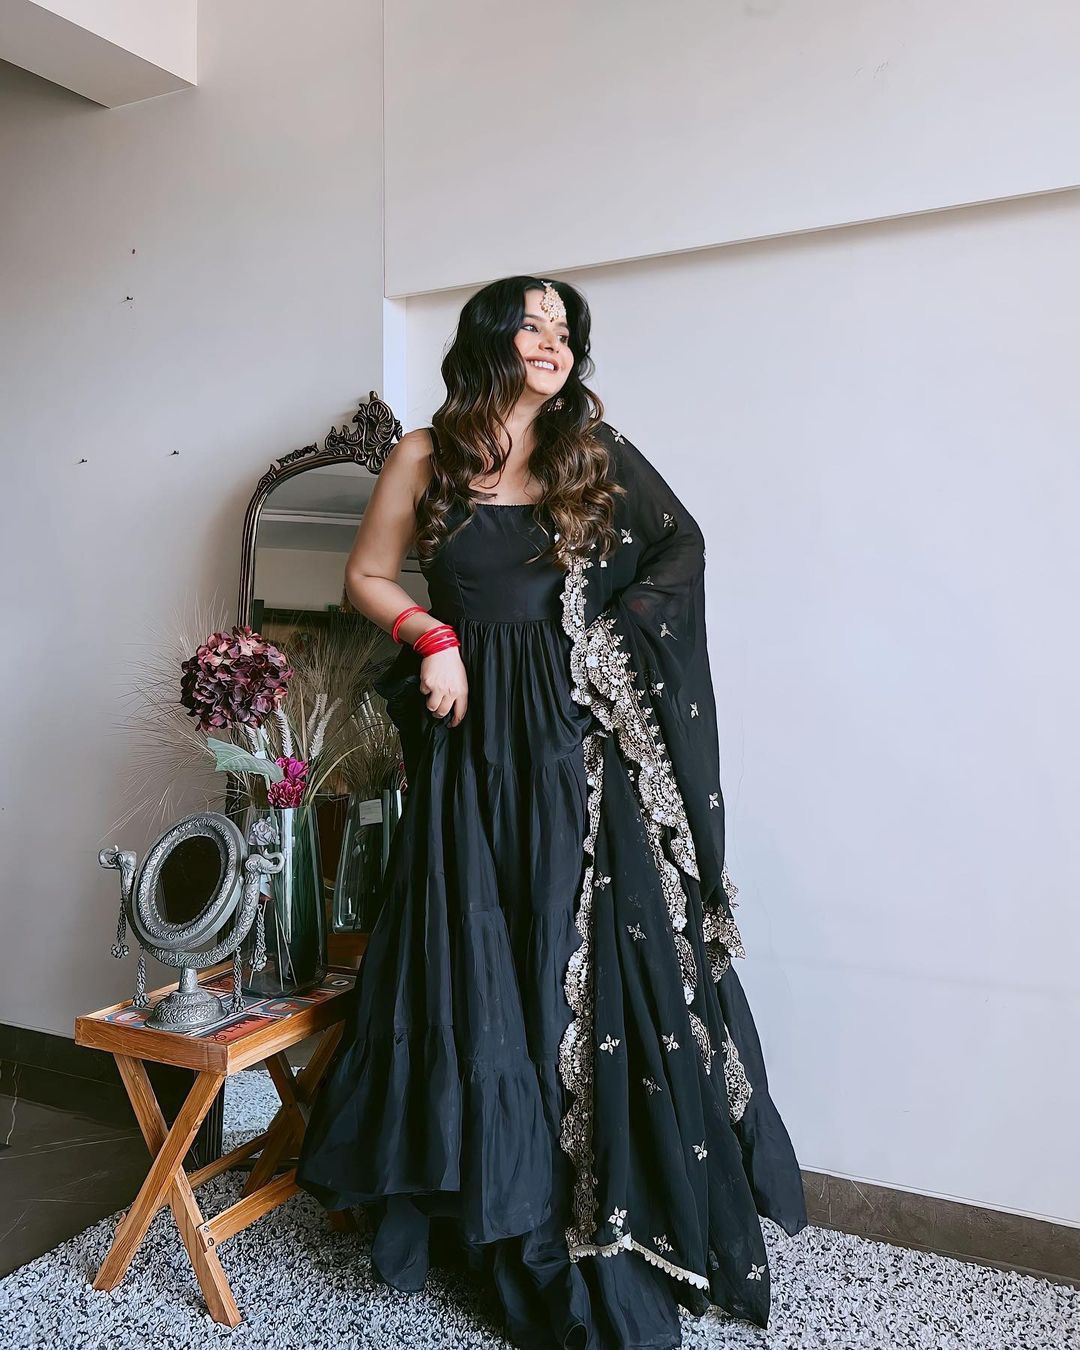 Black Anarkali Dress | Buy Black Colour Anarkali Dress Online | KalaNiketan